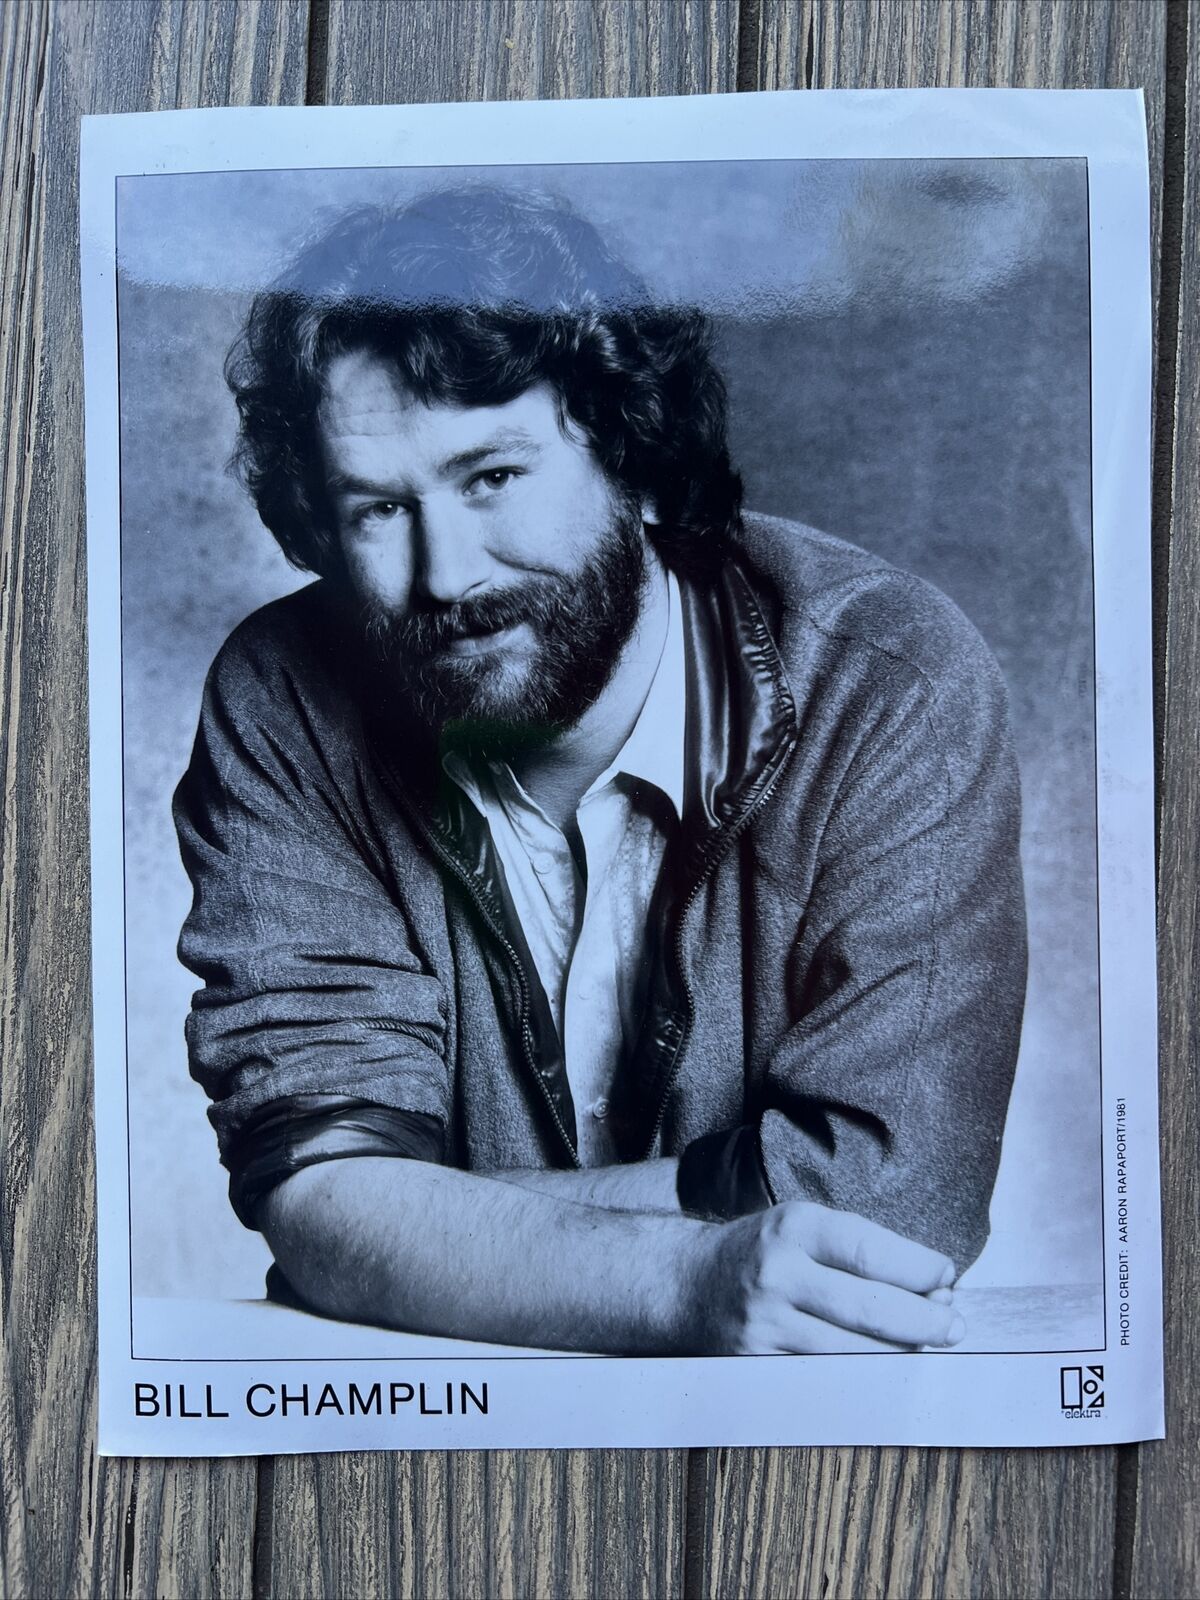 1981 Press Photo Bill Champlin, blues singer, songwriter and musician 8 X 10